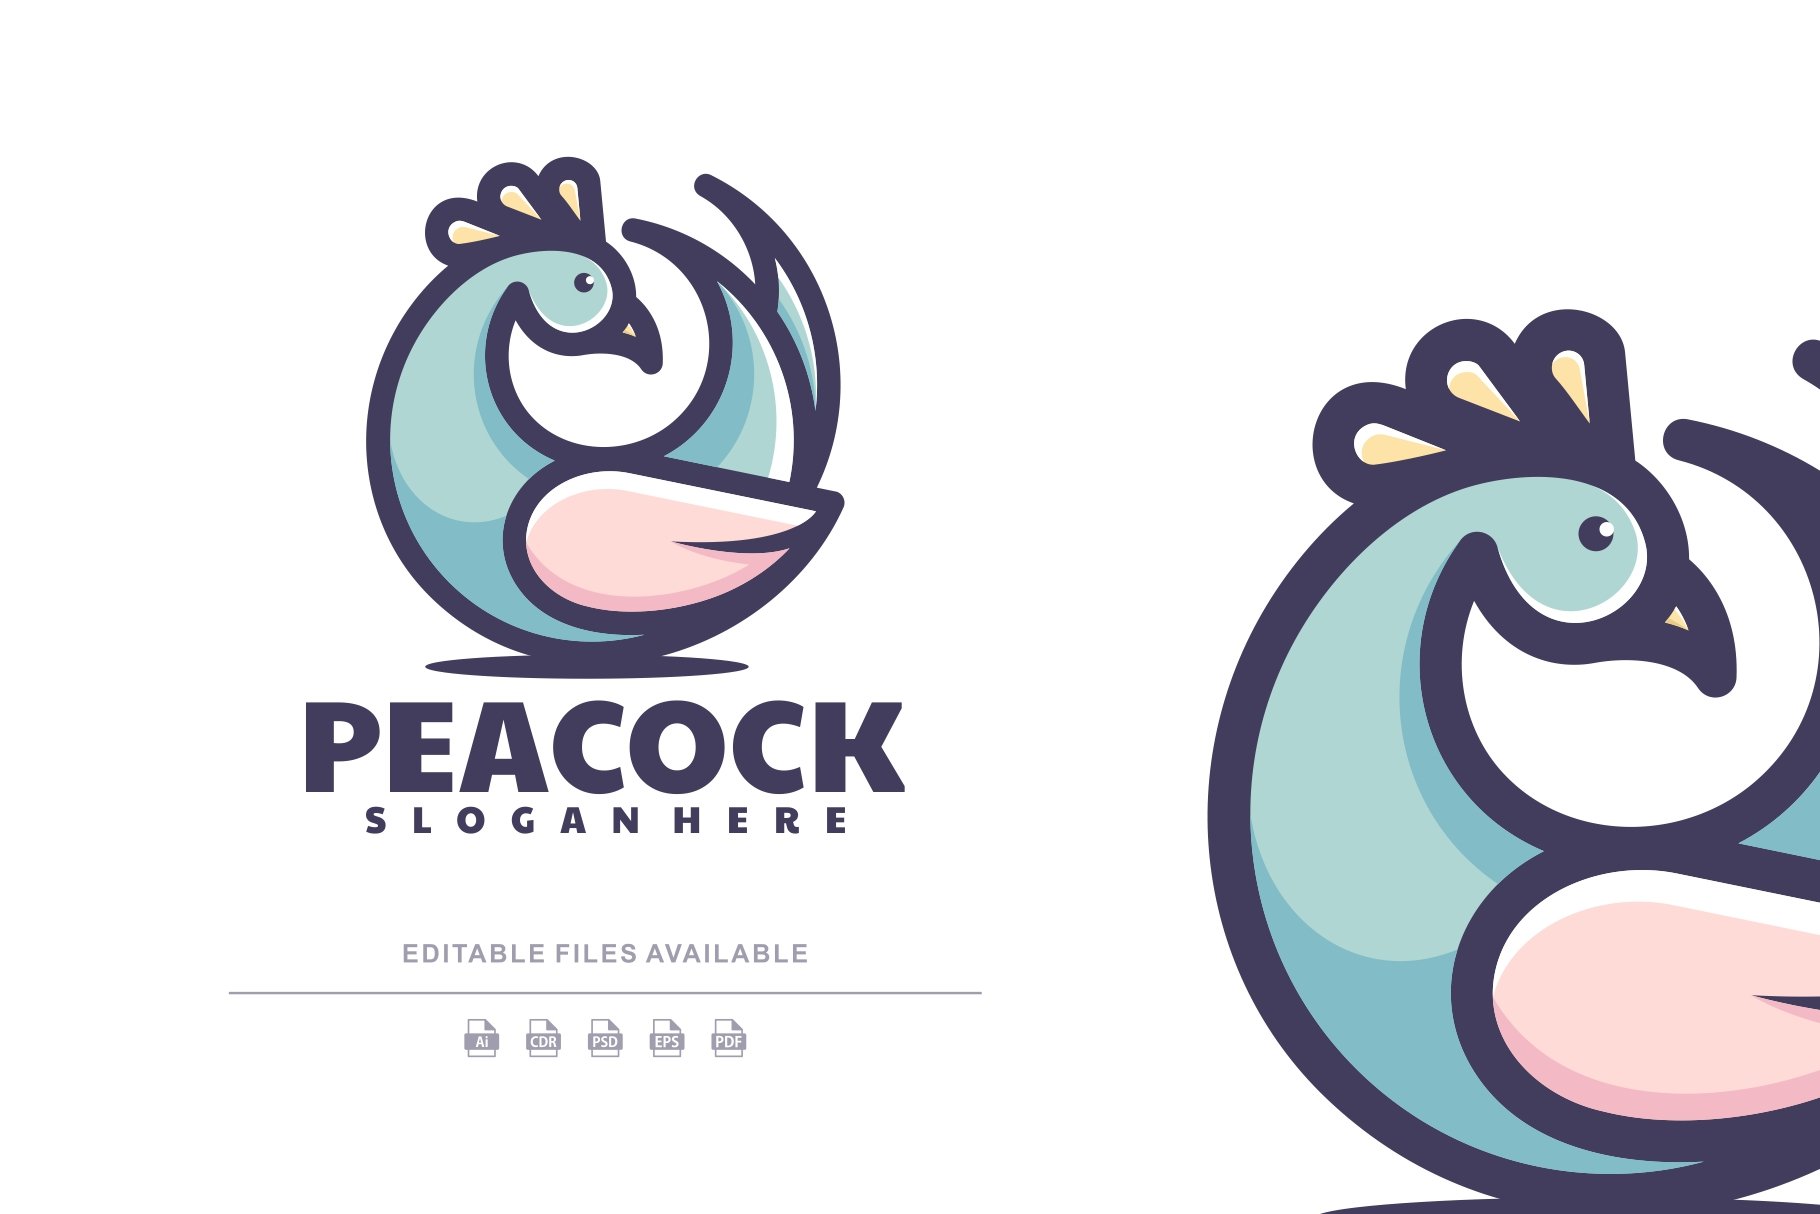 Peacock Simple Mascot Logo cover image.